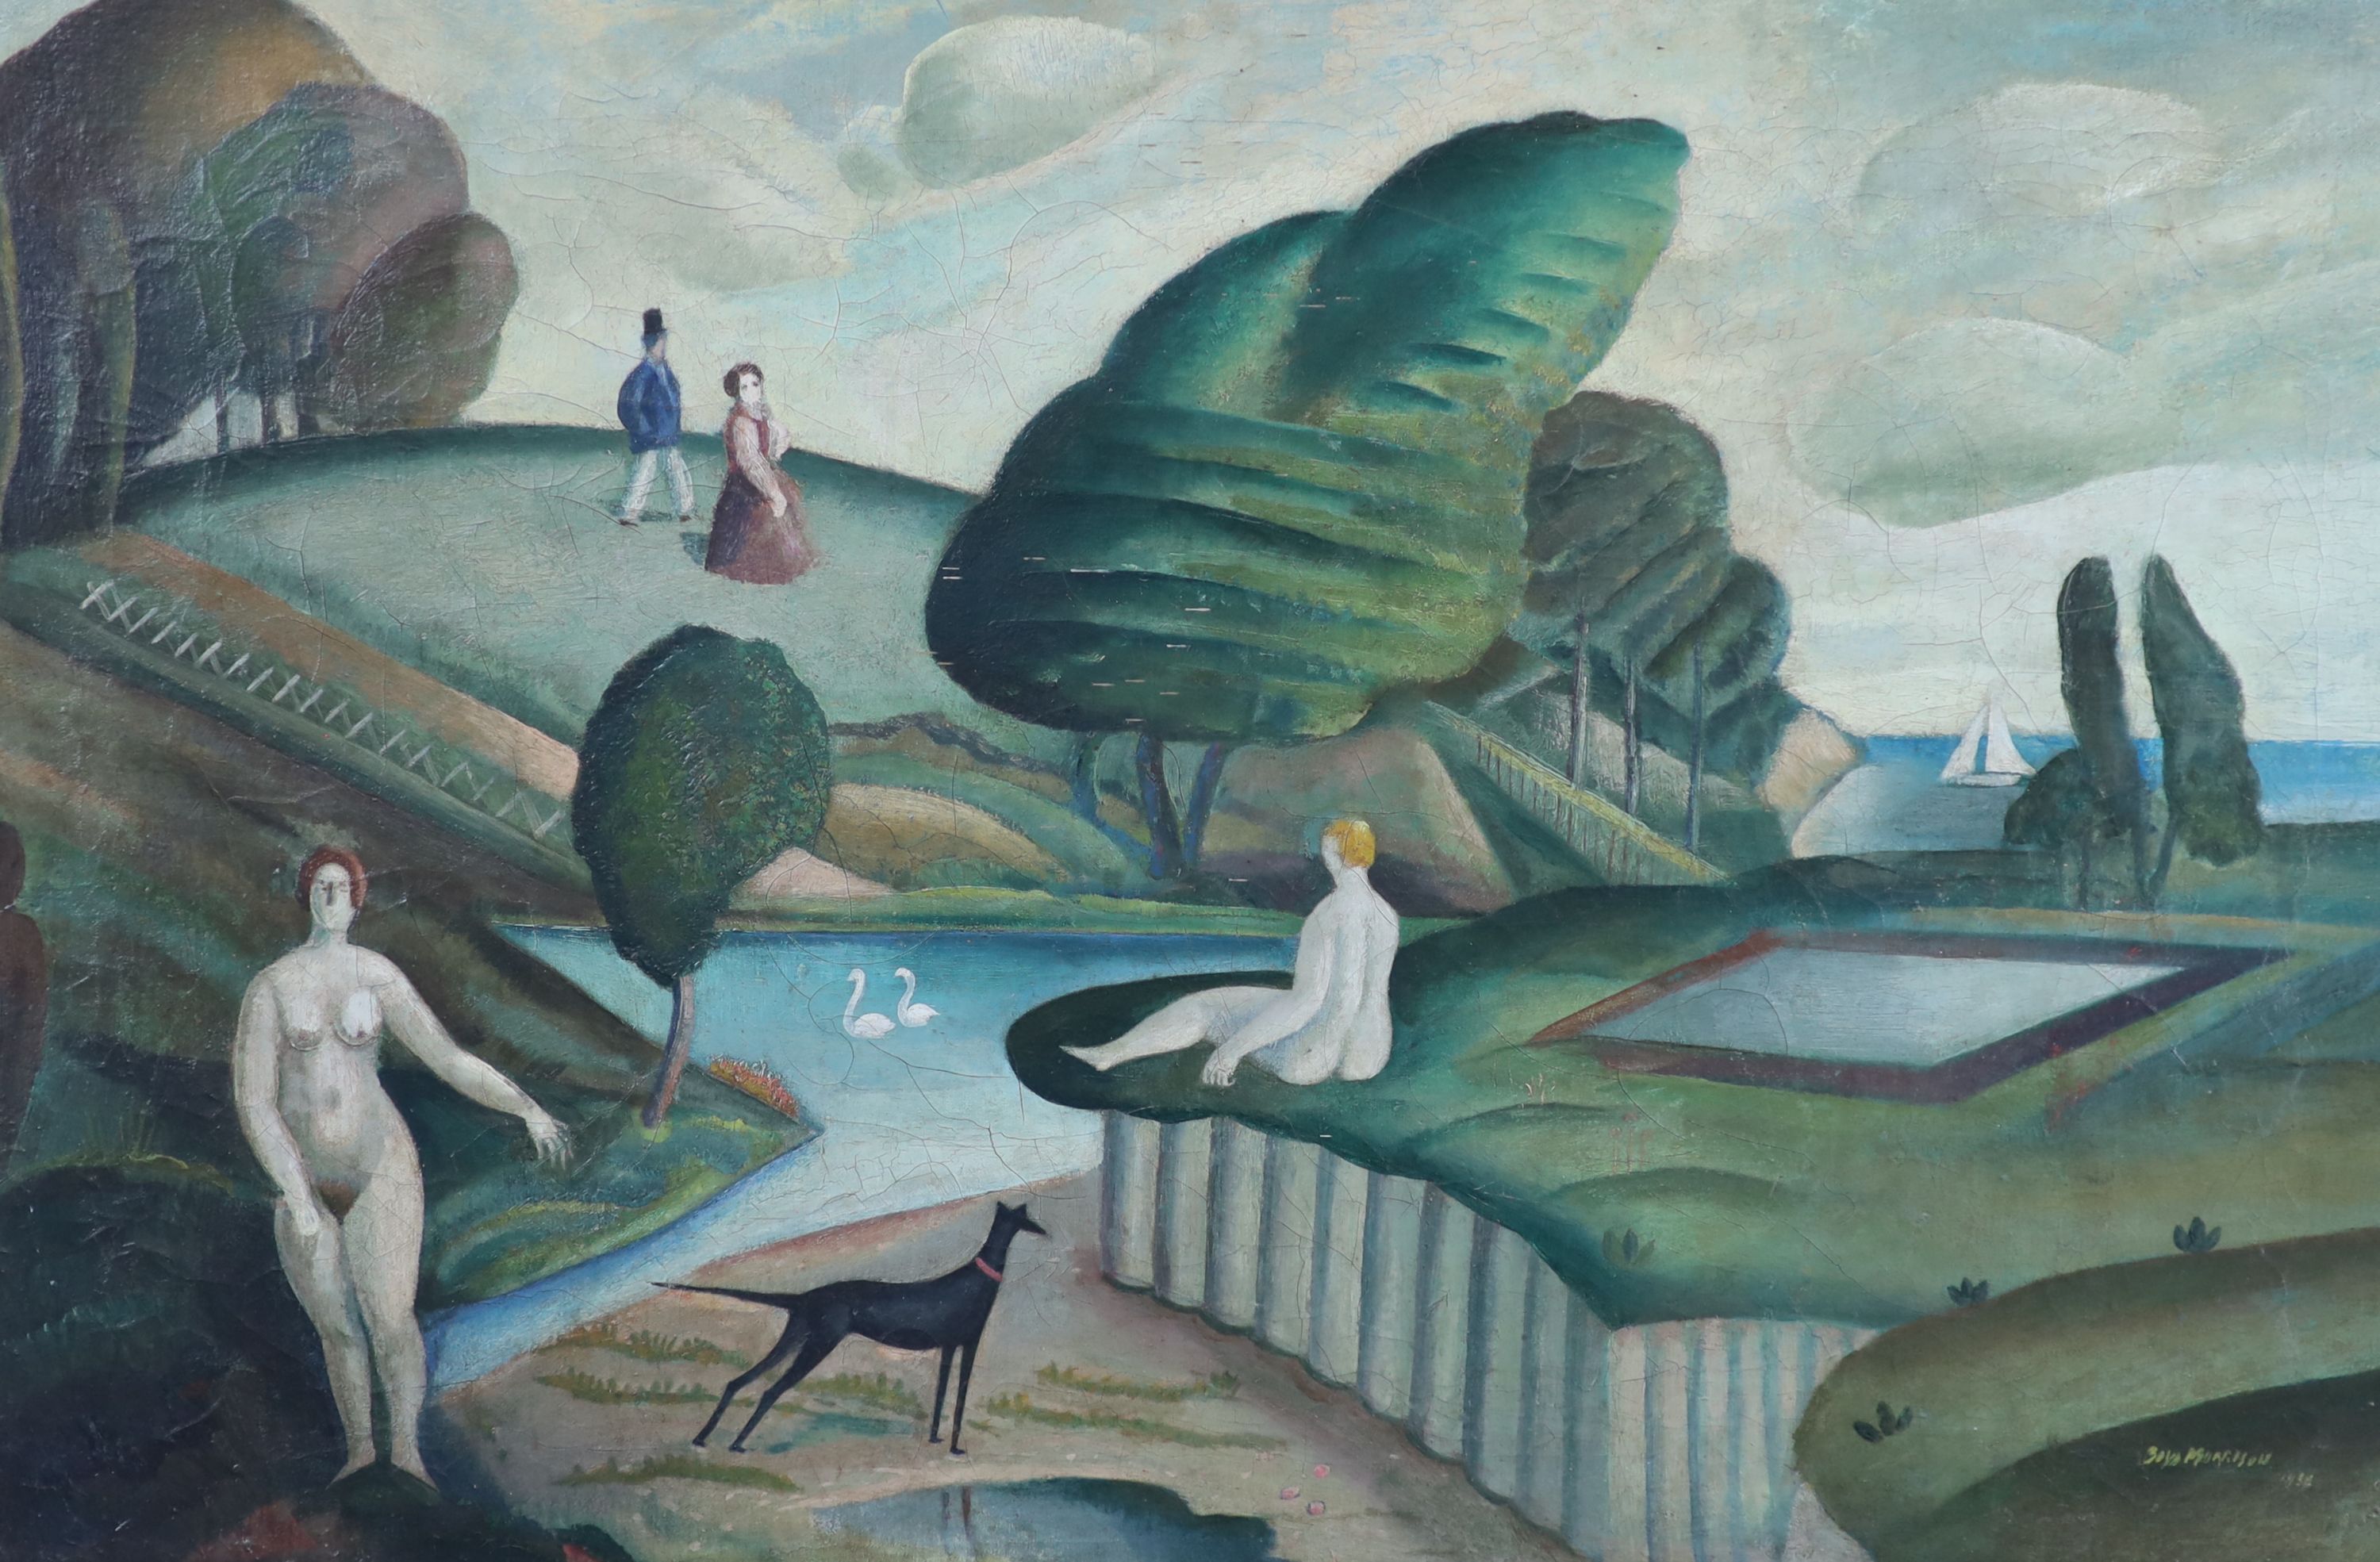 Robert Boyd Morrison (1896-1969), The Bathers, Oil on canvas, 60 x 90cm.